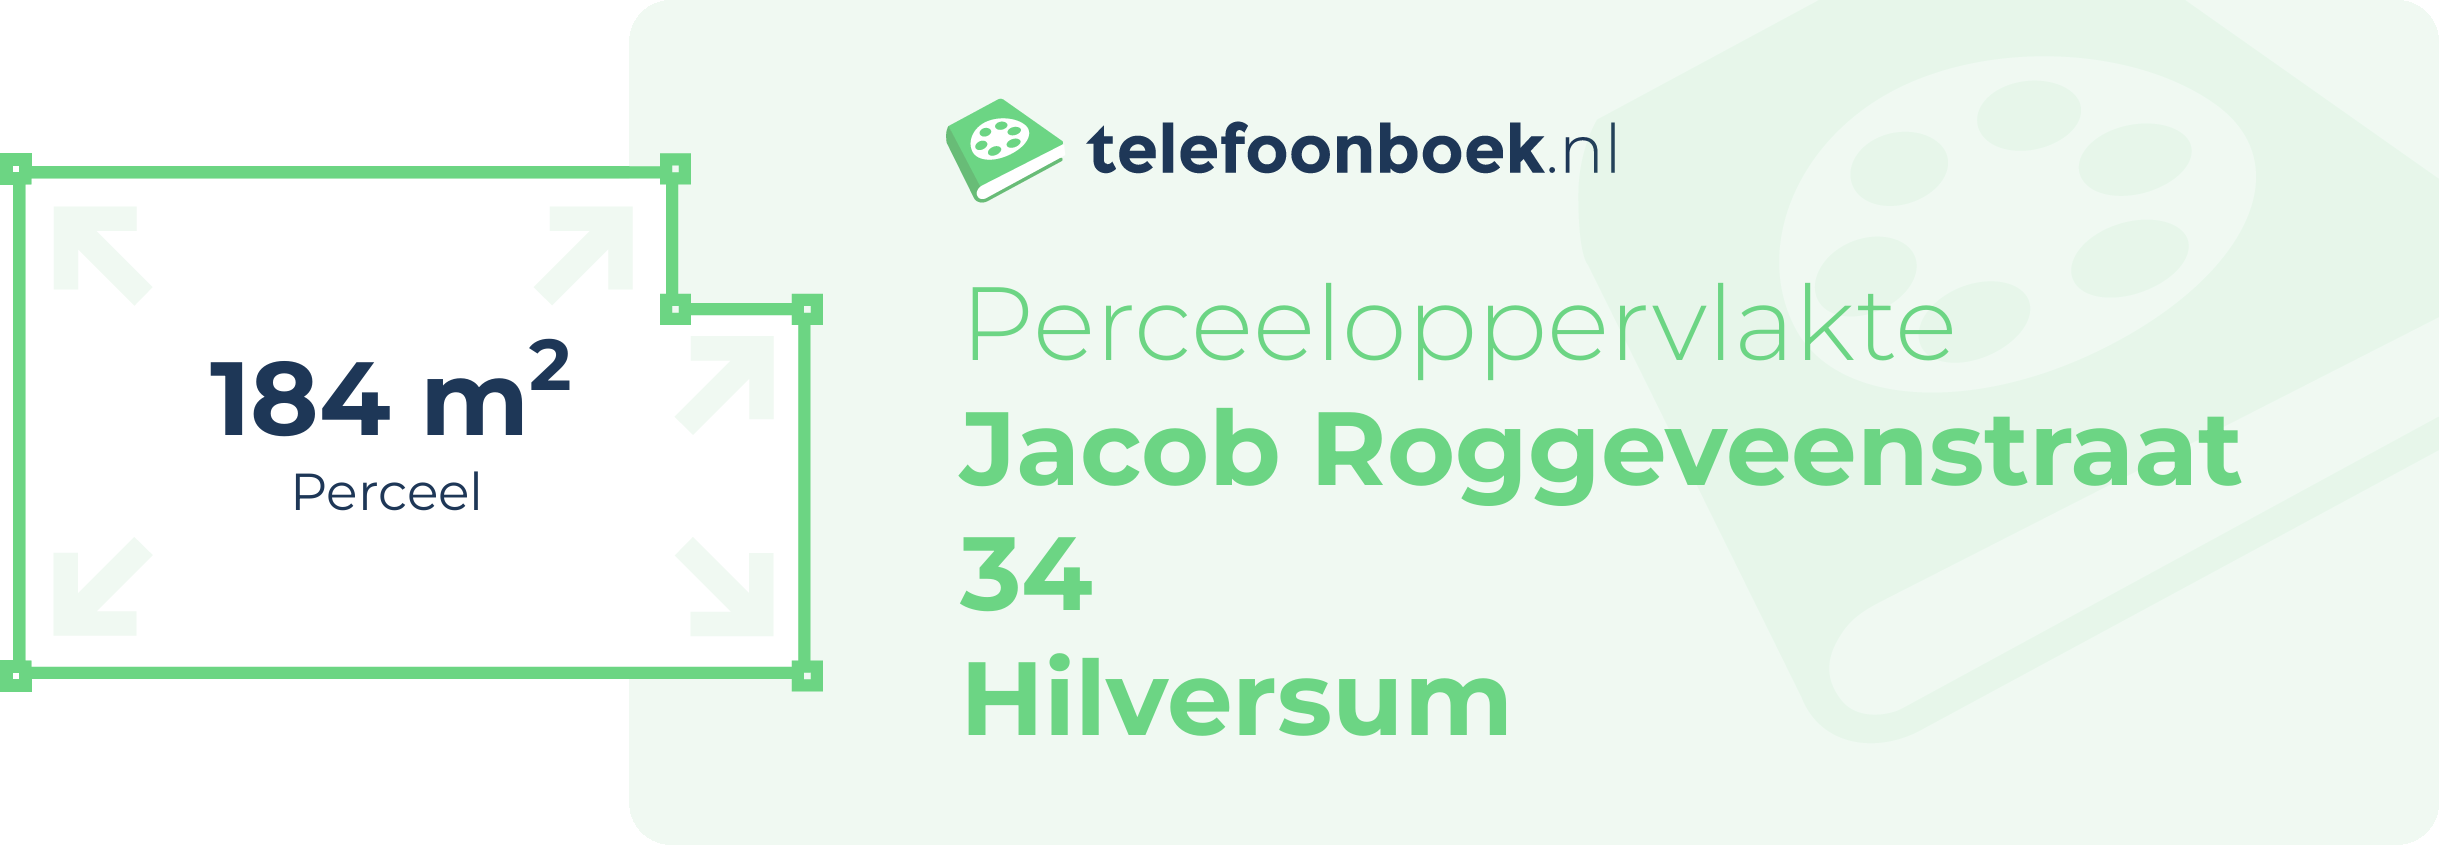 Perceeloppervlakte Jacob Roggeveenstraat 34 Hilversum